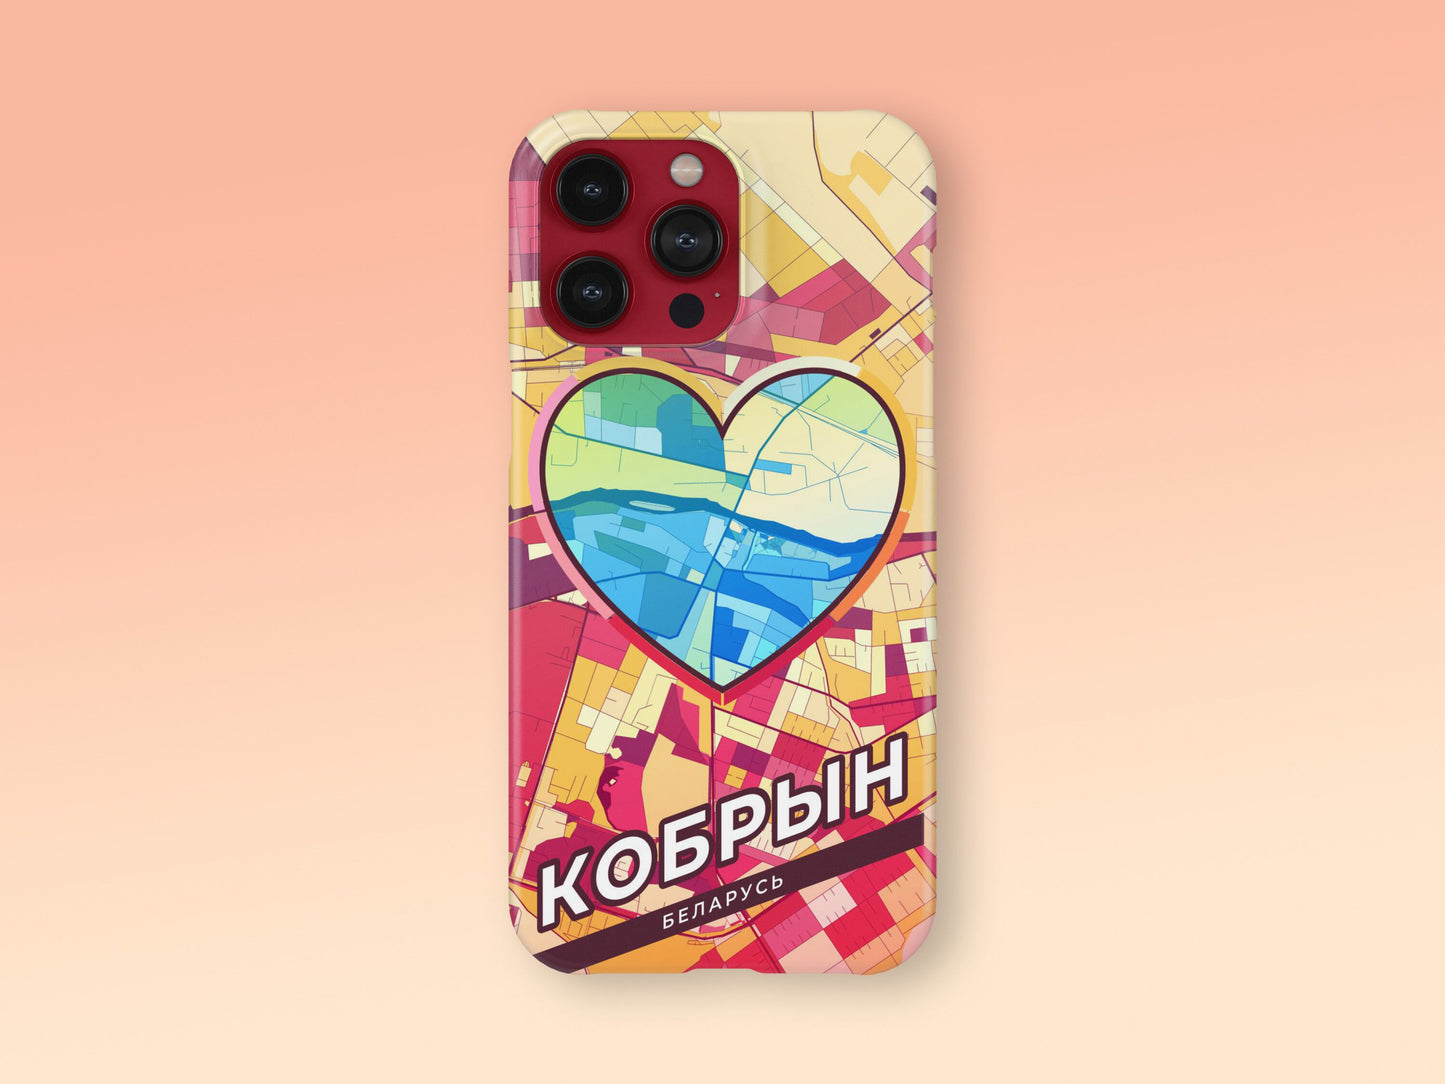 Кобрын Беларусь slim phone case with colorful icon. Birthday, wedding or housewarming gift. Couple match cases. 2